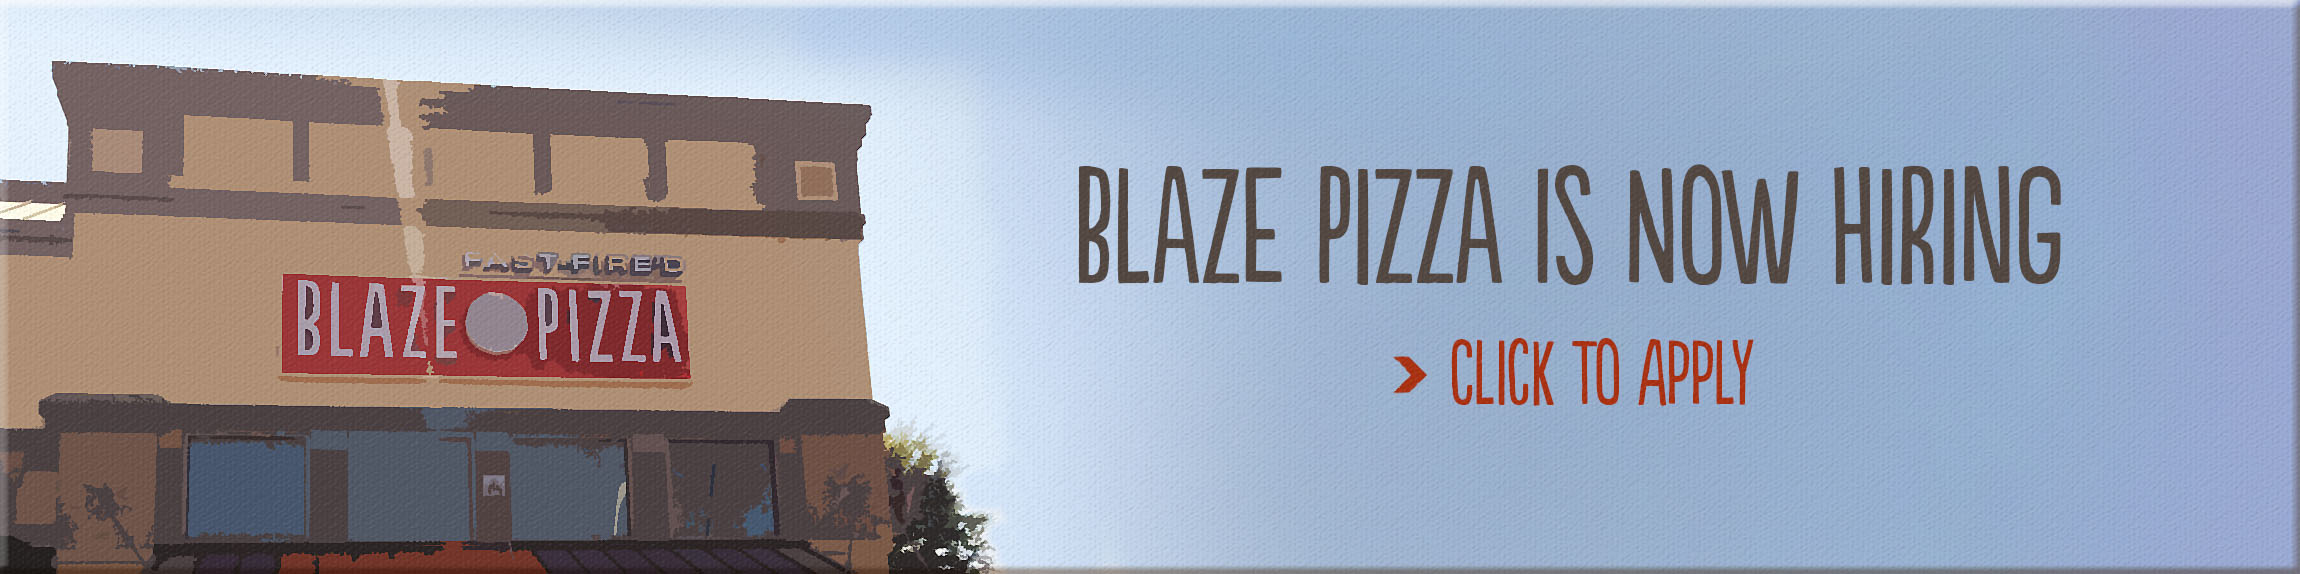 Blaze Pizza is now hiring